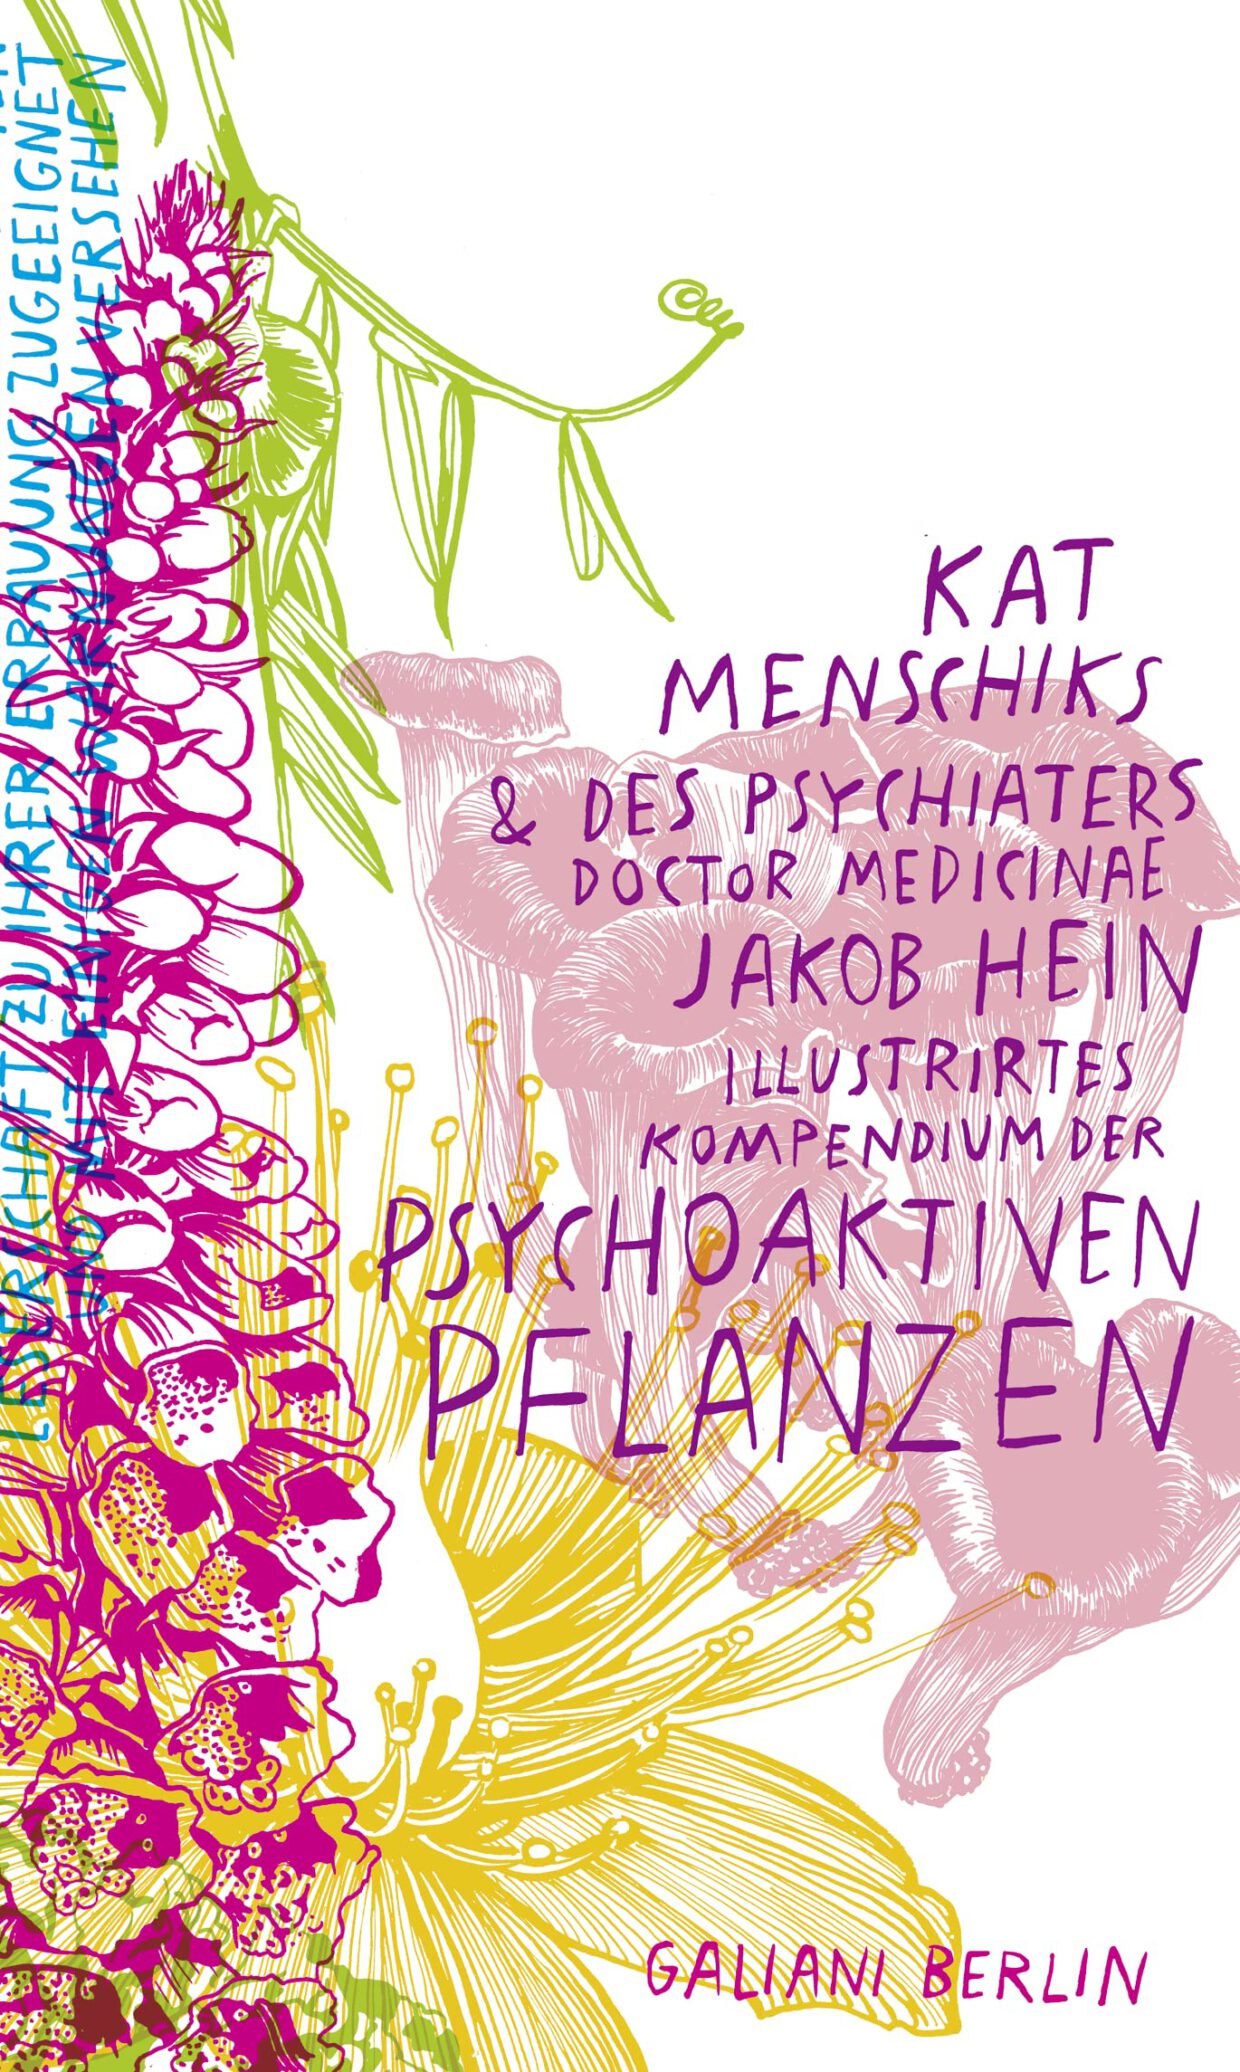 Kat Menschiks & des Psychiaters Doctor Medicinae Jakob Hein illustriertes Kompendium der psychoaktiven Pflanzen